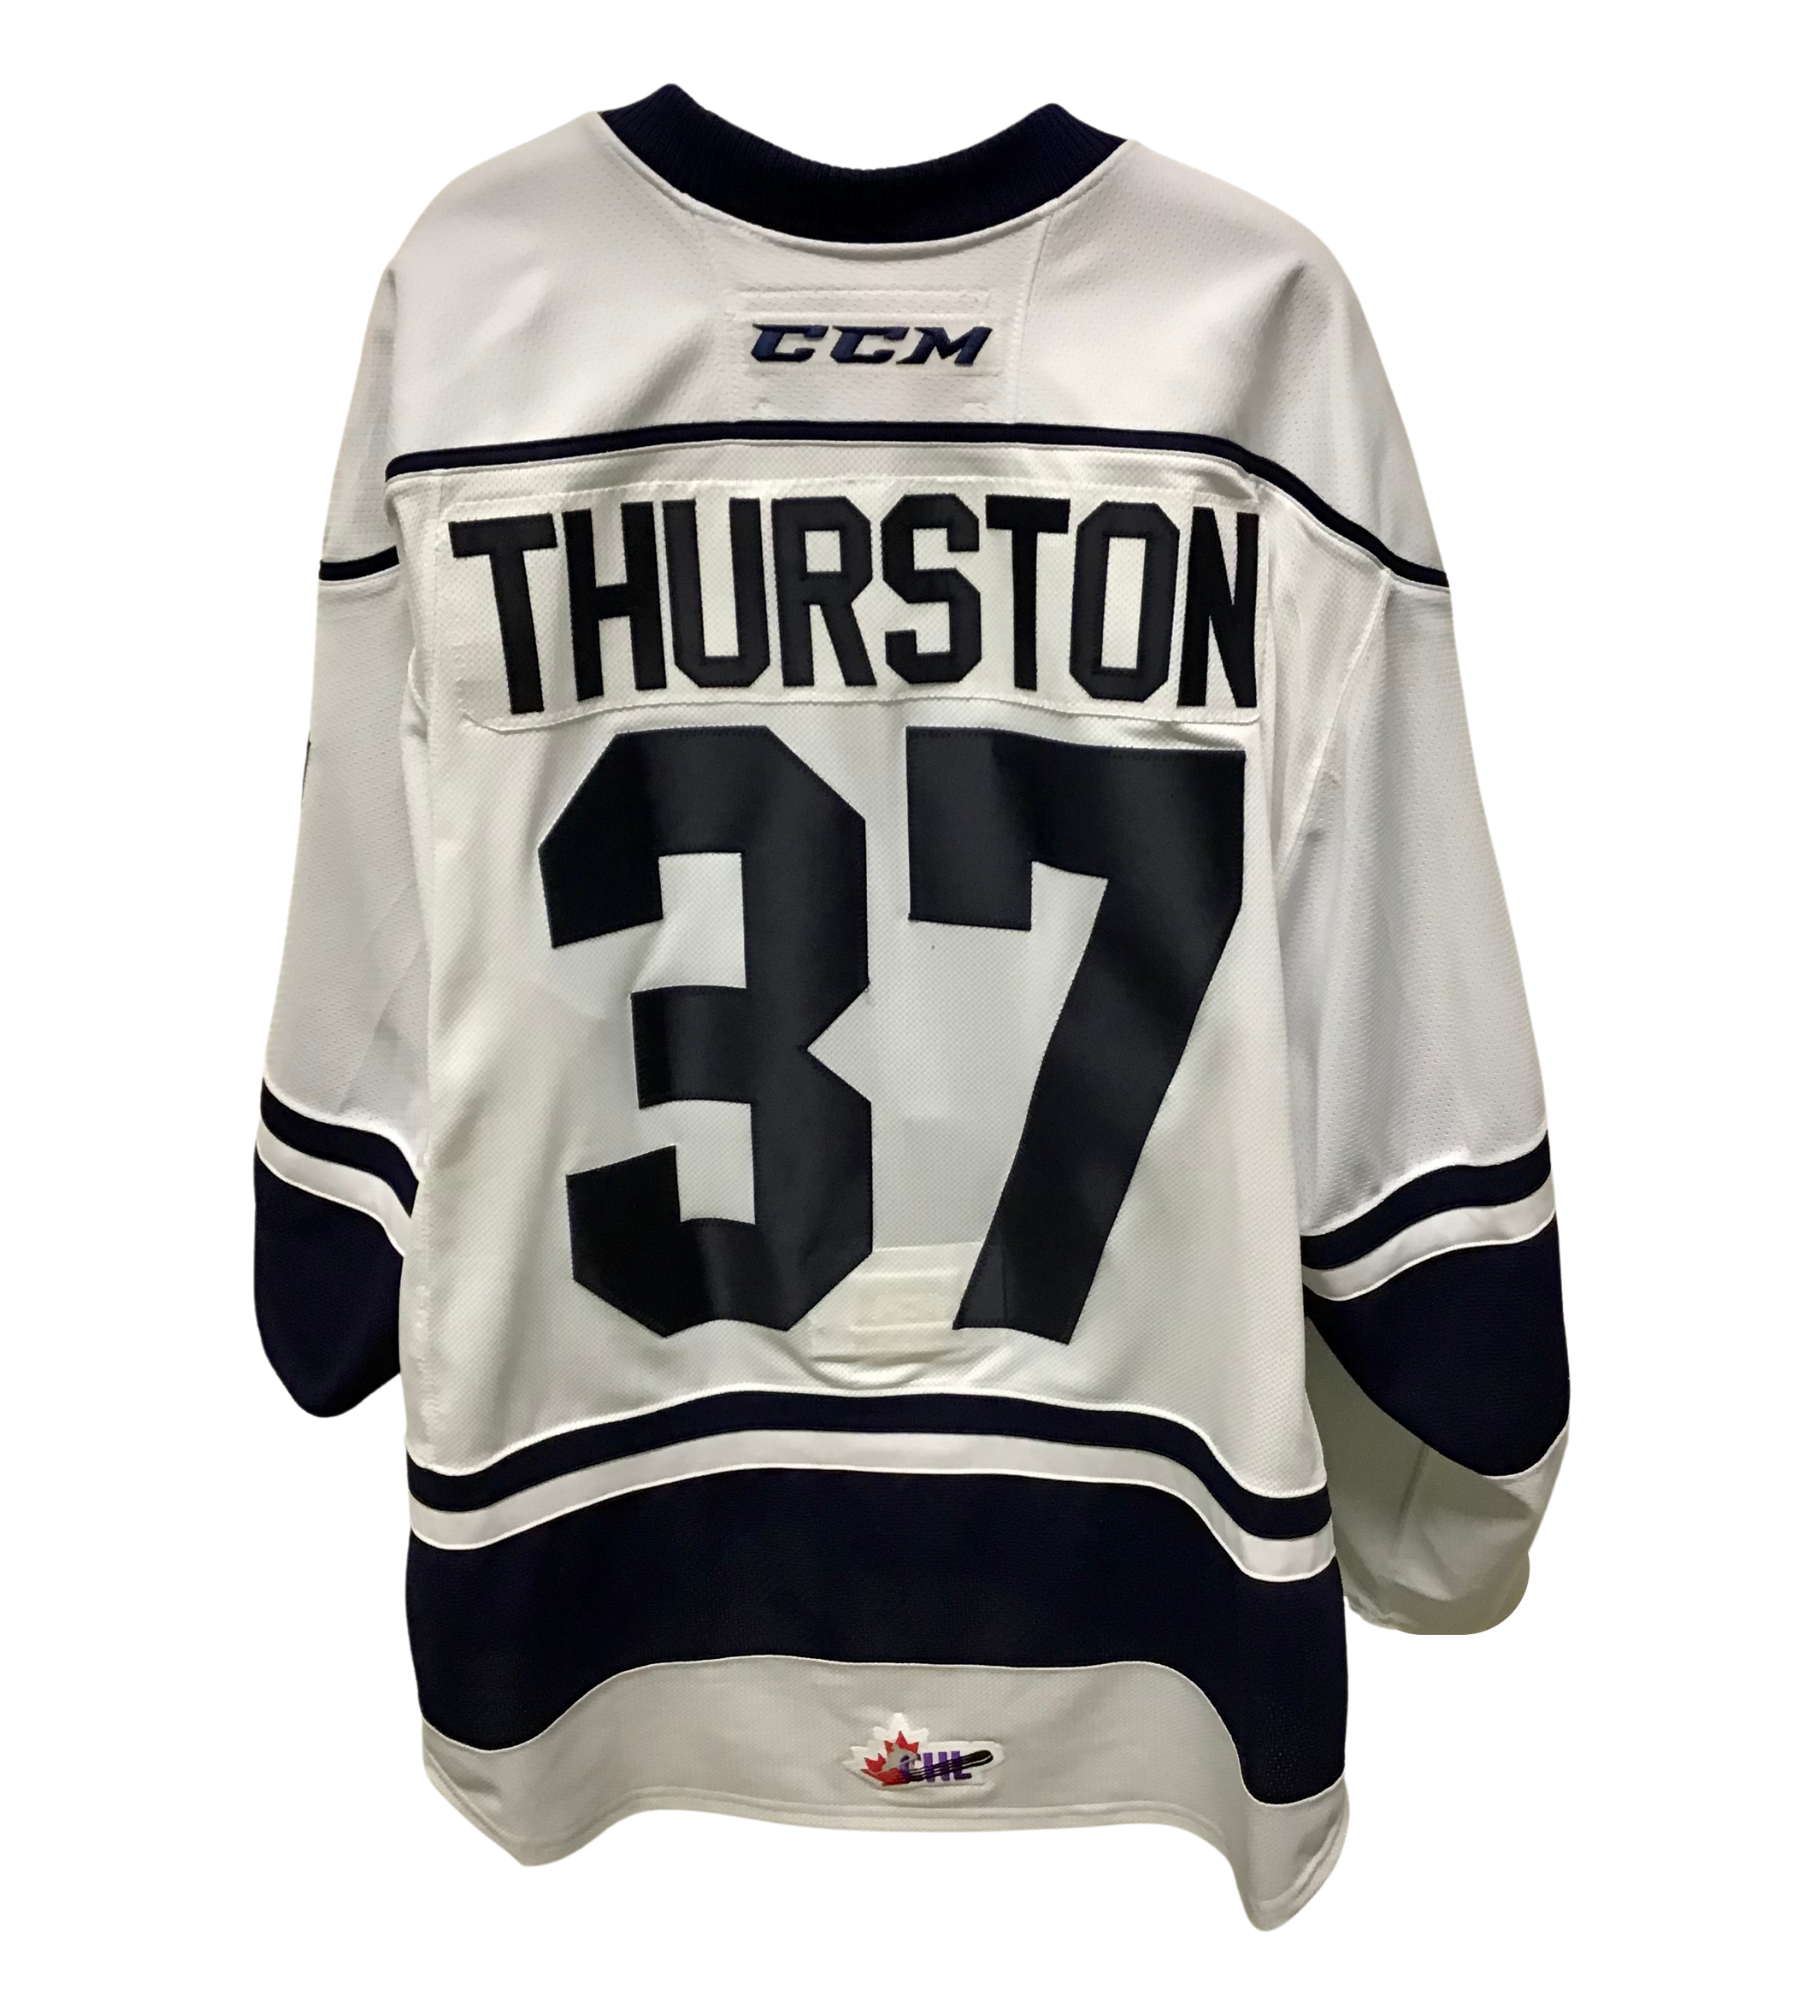 2019-20 Trevor Thurston #37 Jersey